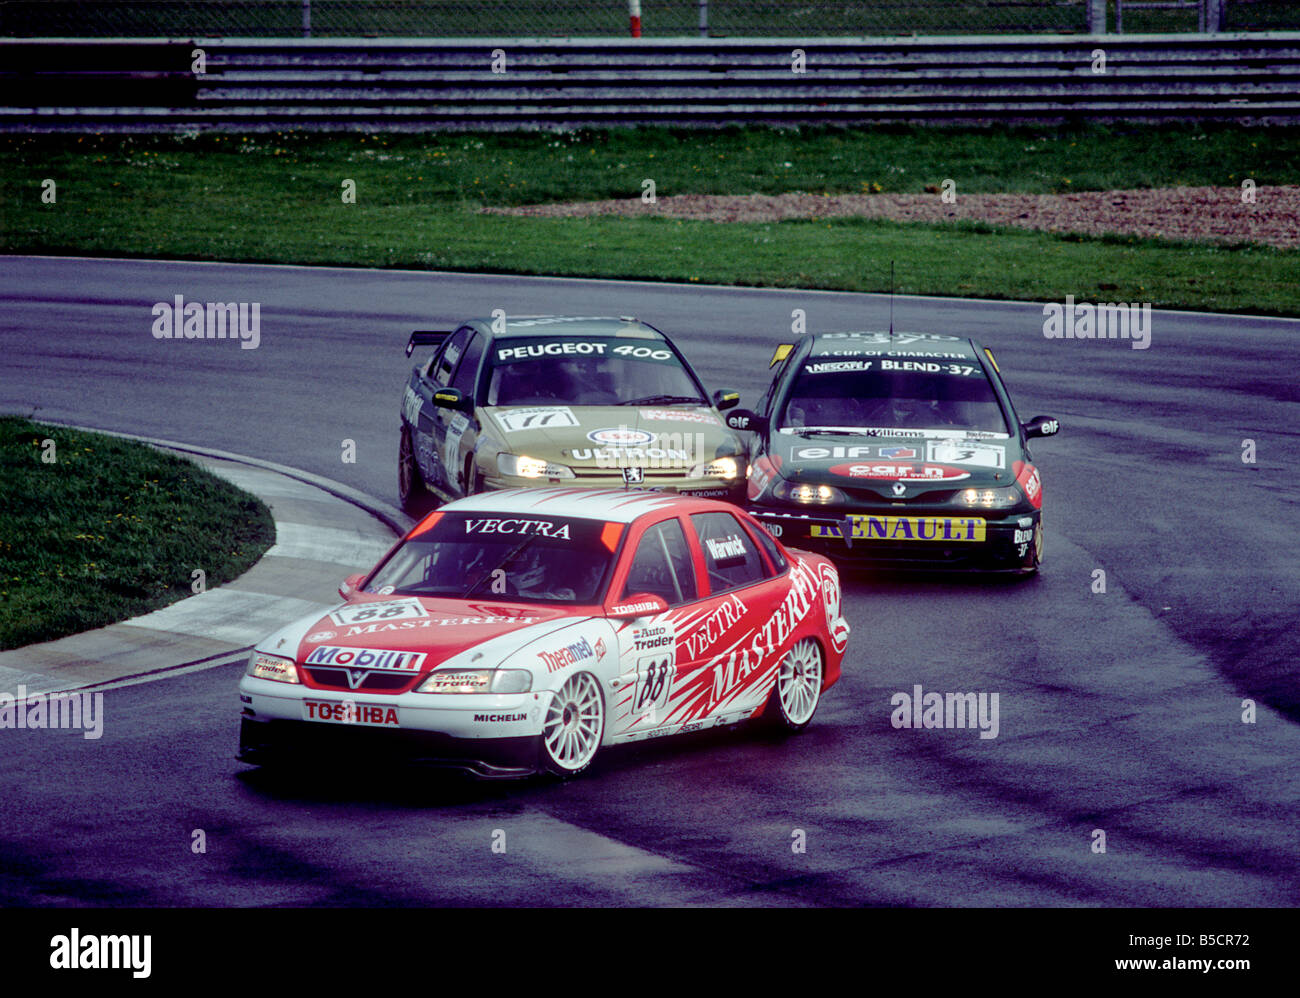 Derek Warwick Paul Radisich e Jason Plato British Touring Car gara Silverstone 26 Aprile 1998 Foto Stock